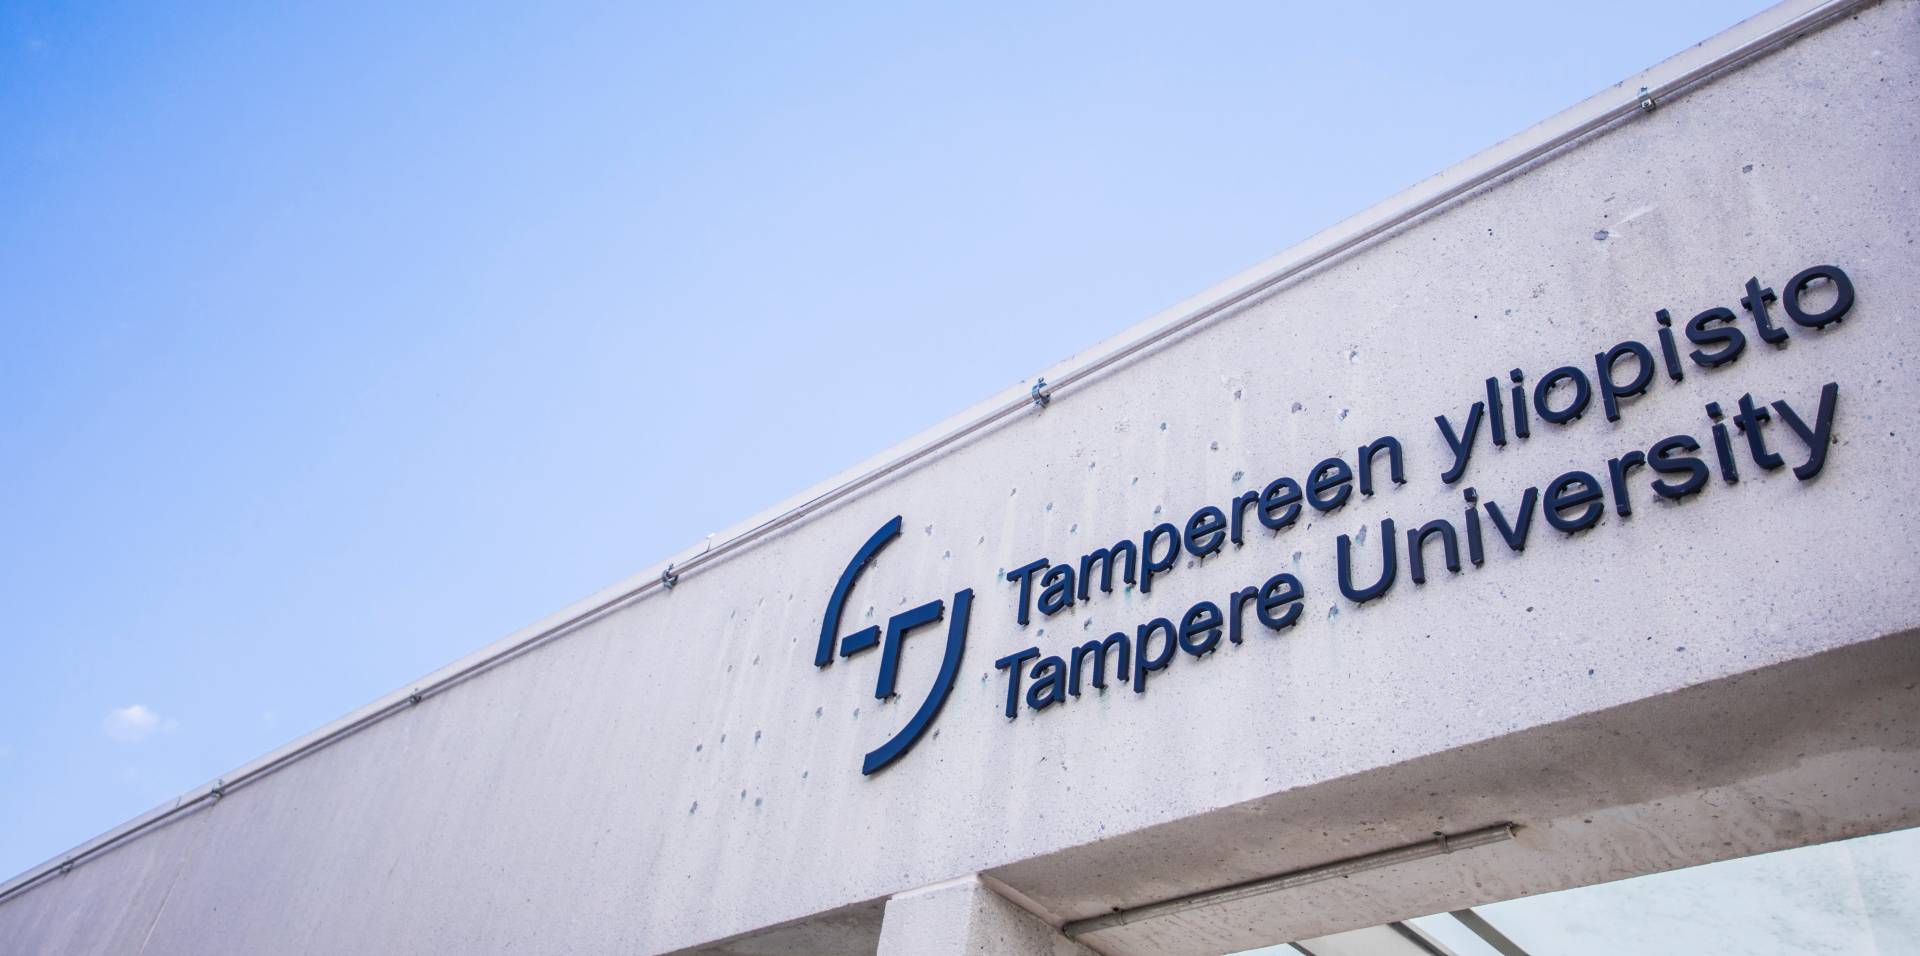 Tampere University logo